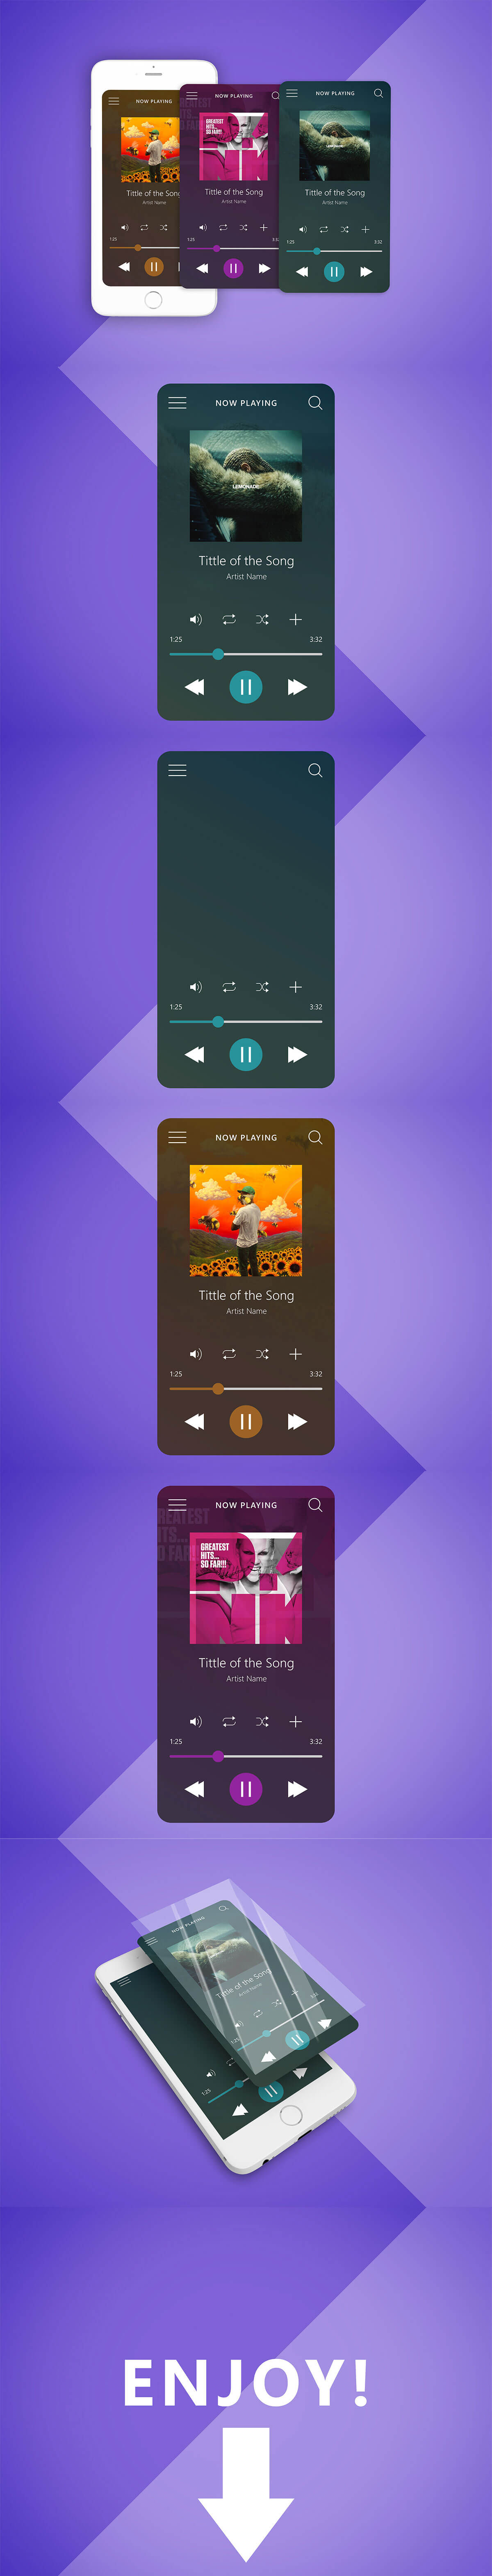 Free Music Player Interface UI Mockup